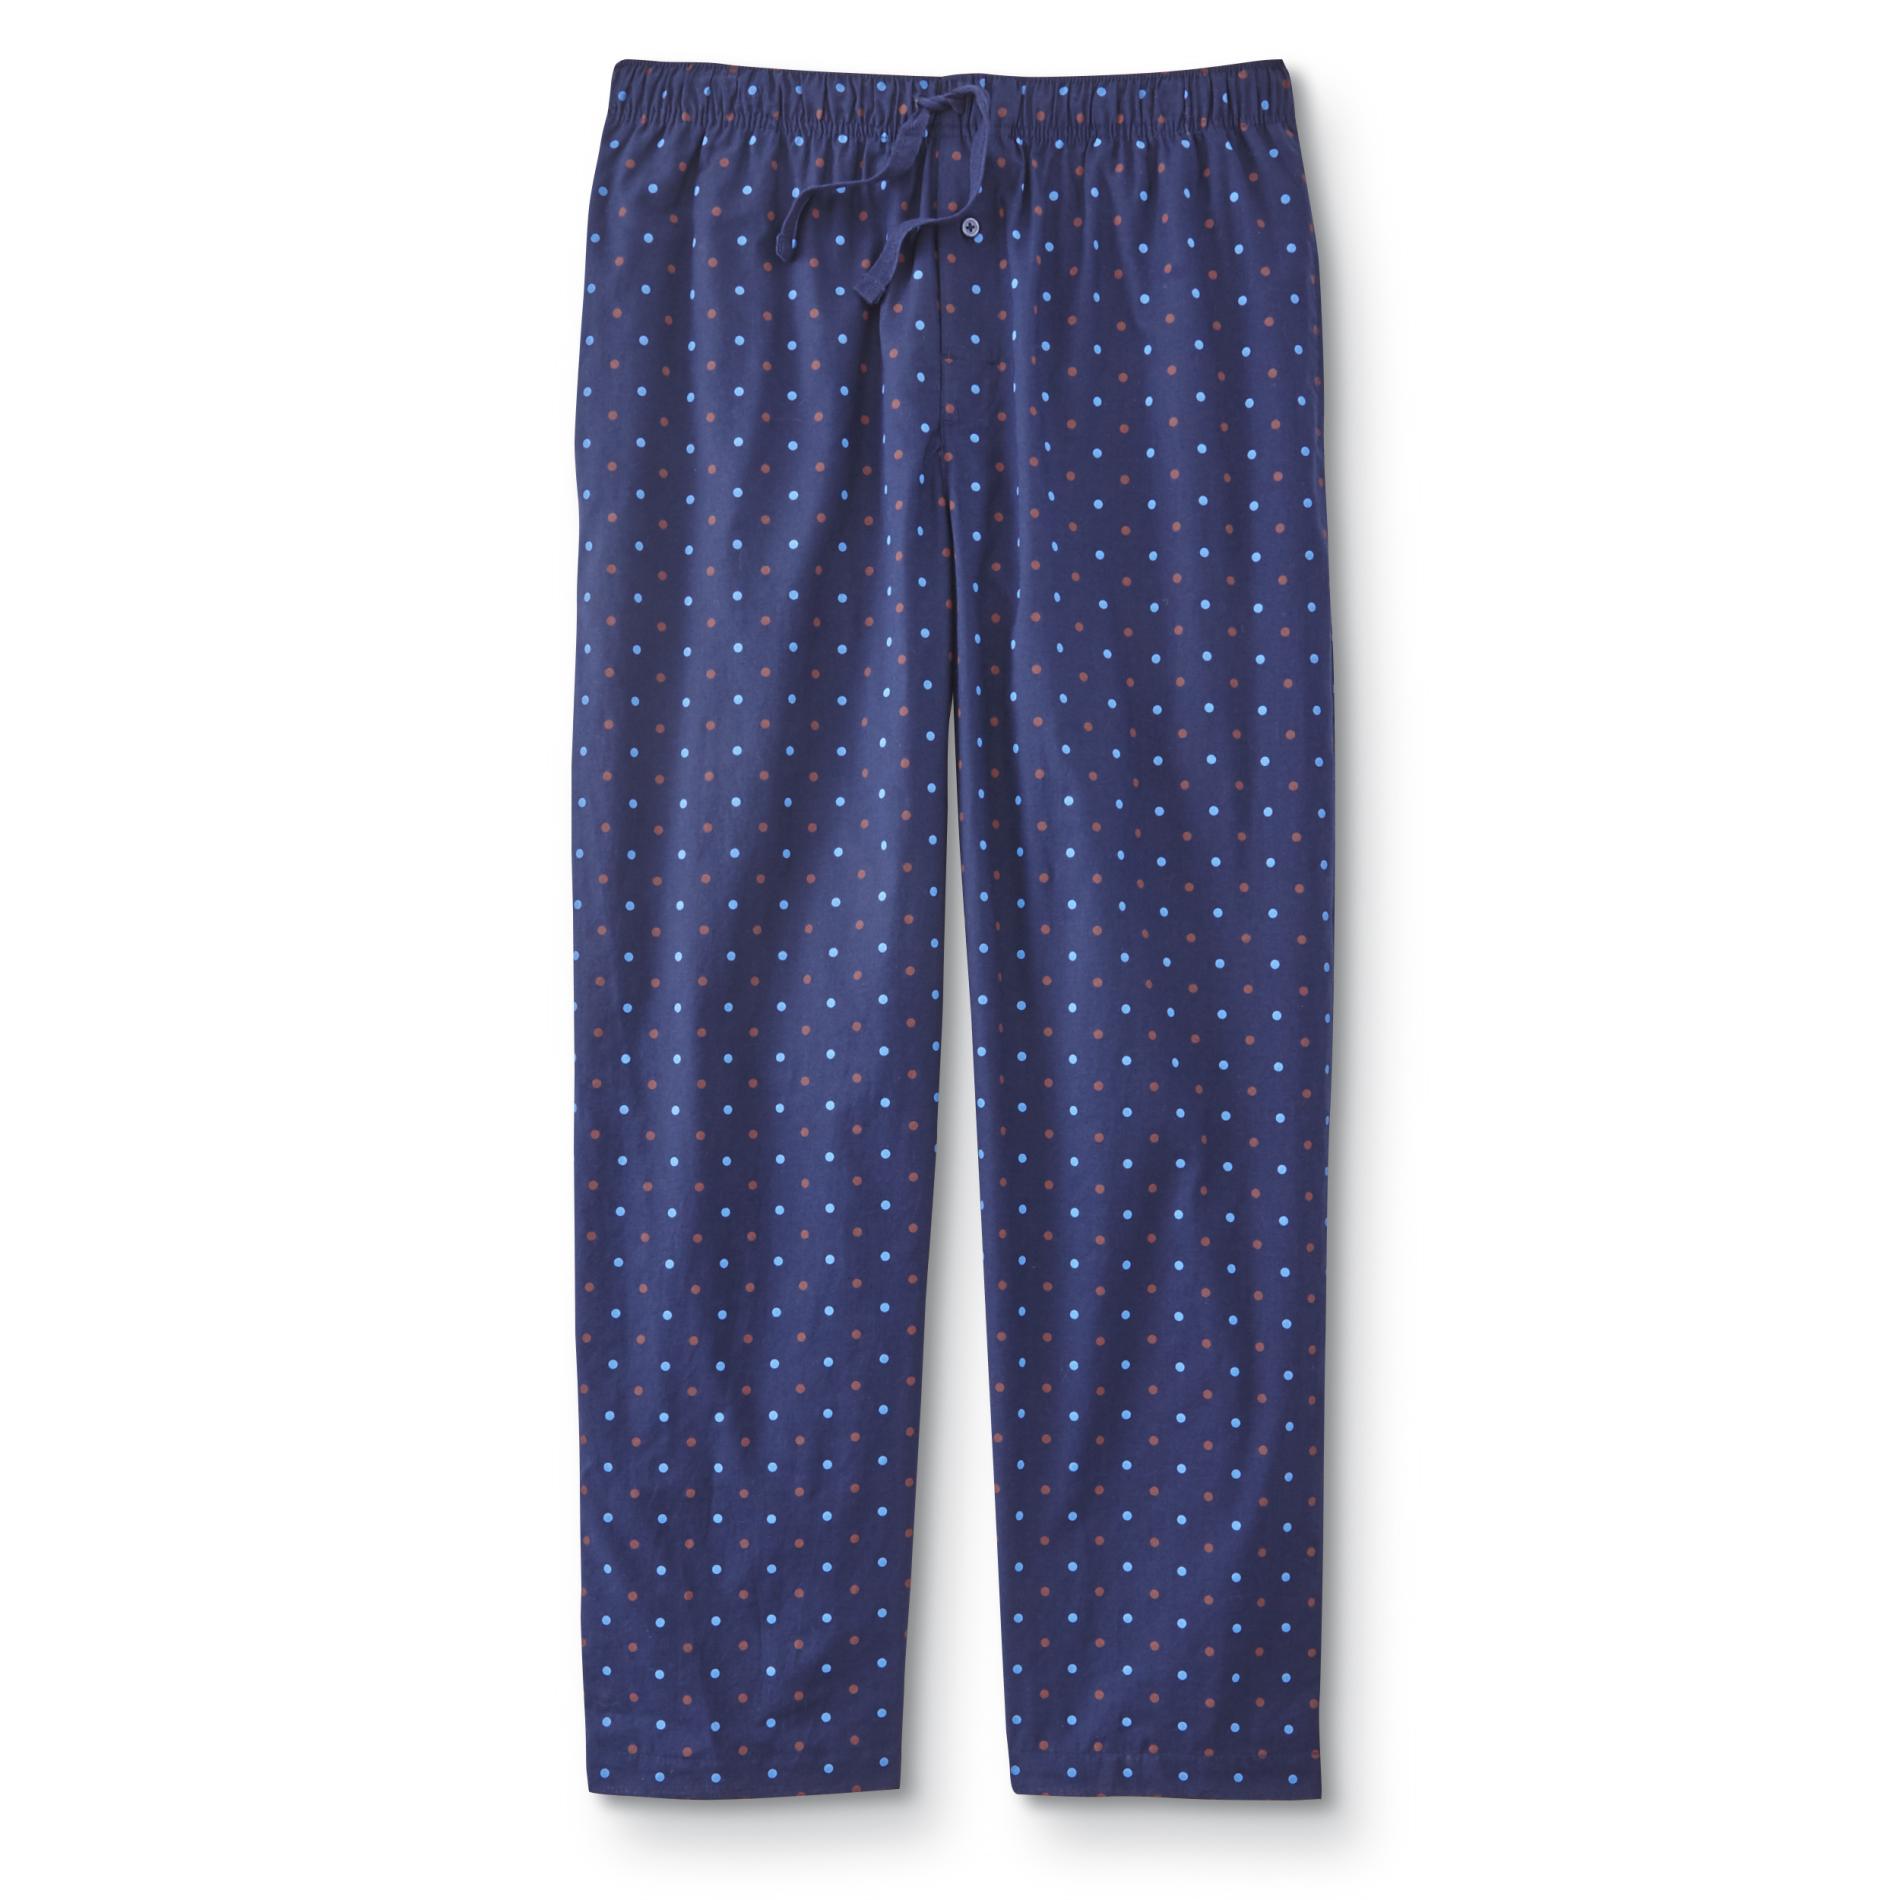 Simply Styled Men's Pajama Pants - Dots